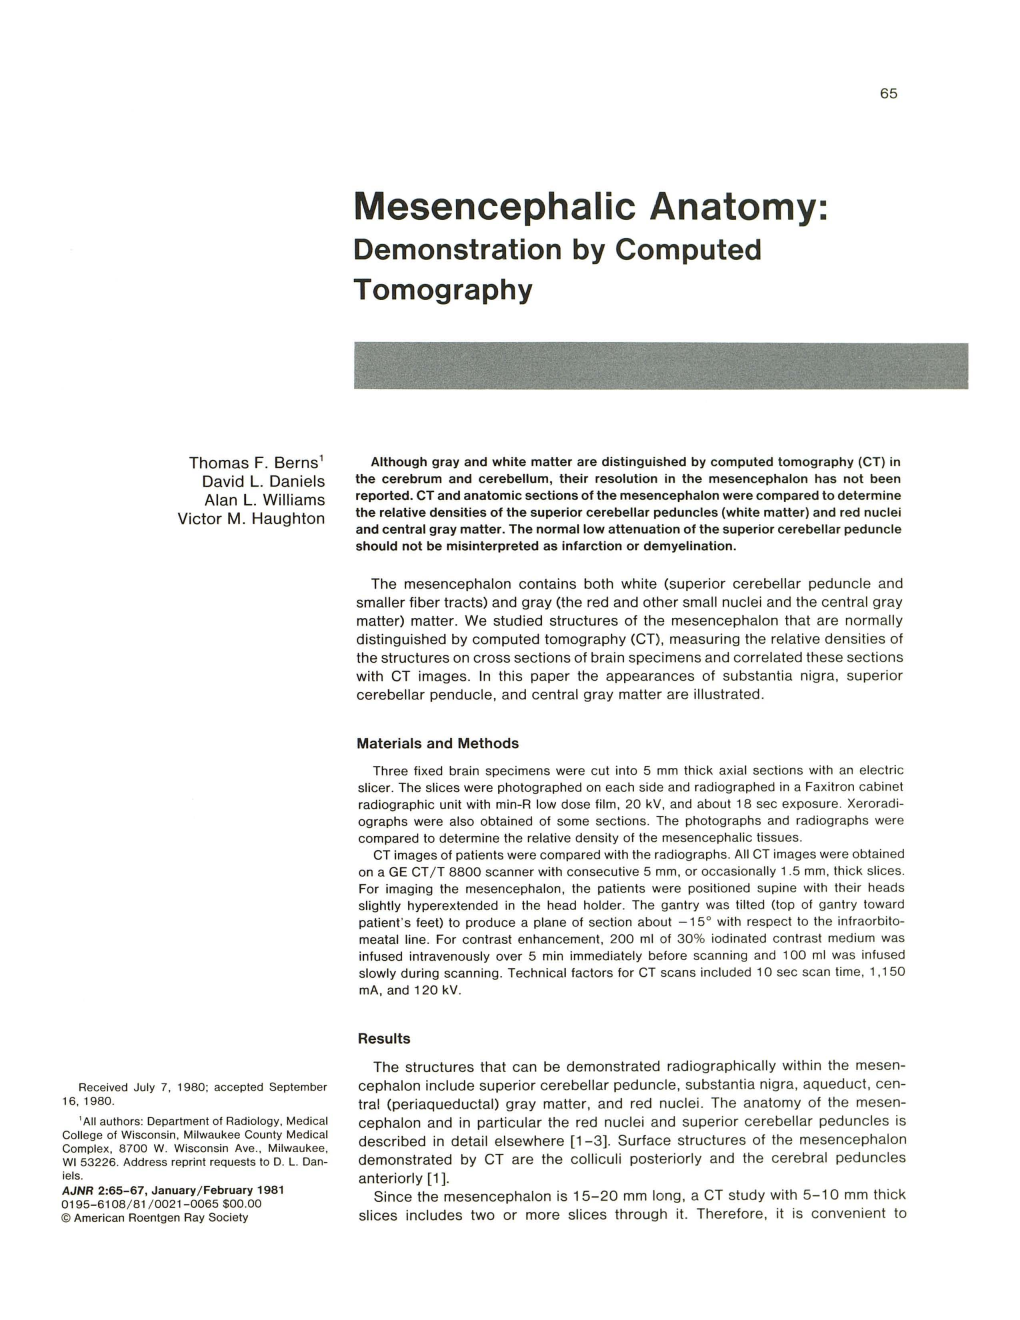 Mesencephalic Anatomy: Demonstration by Computed Tomography